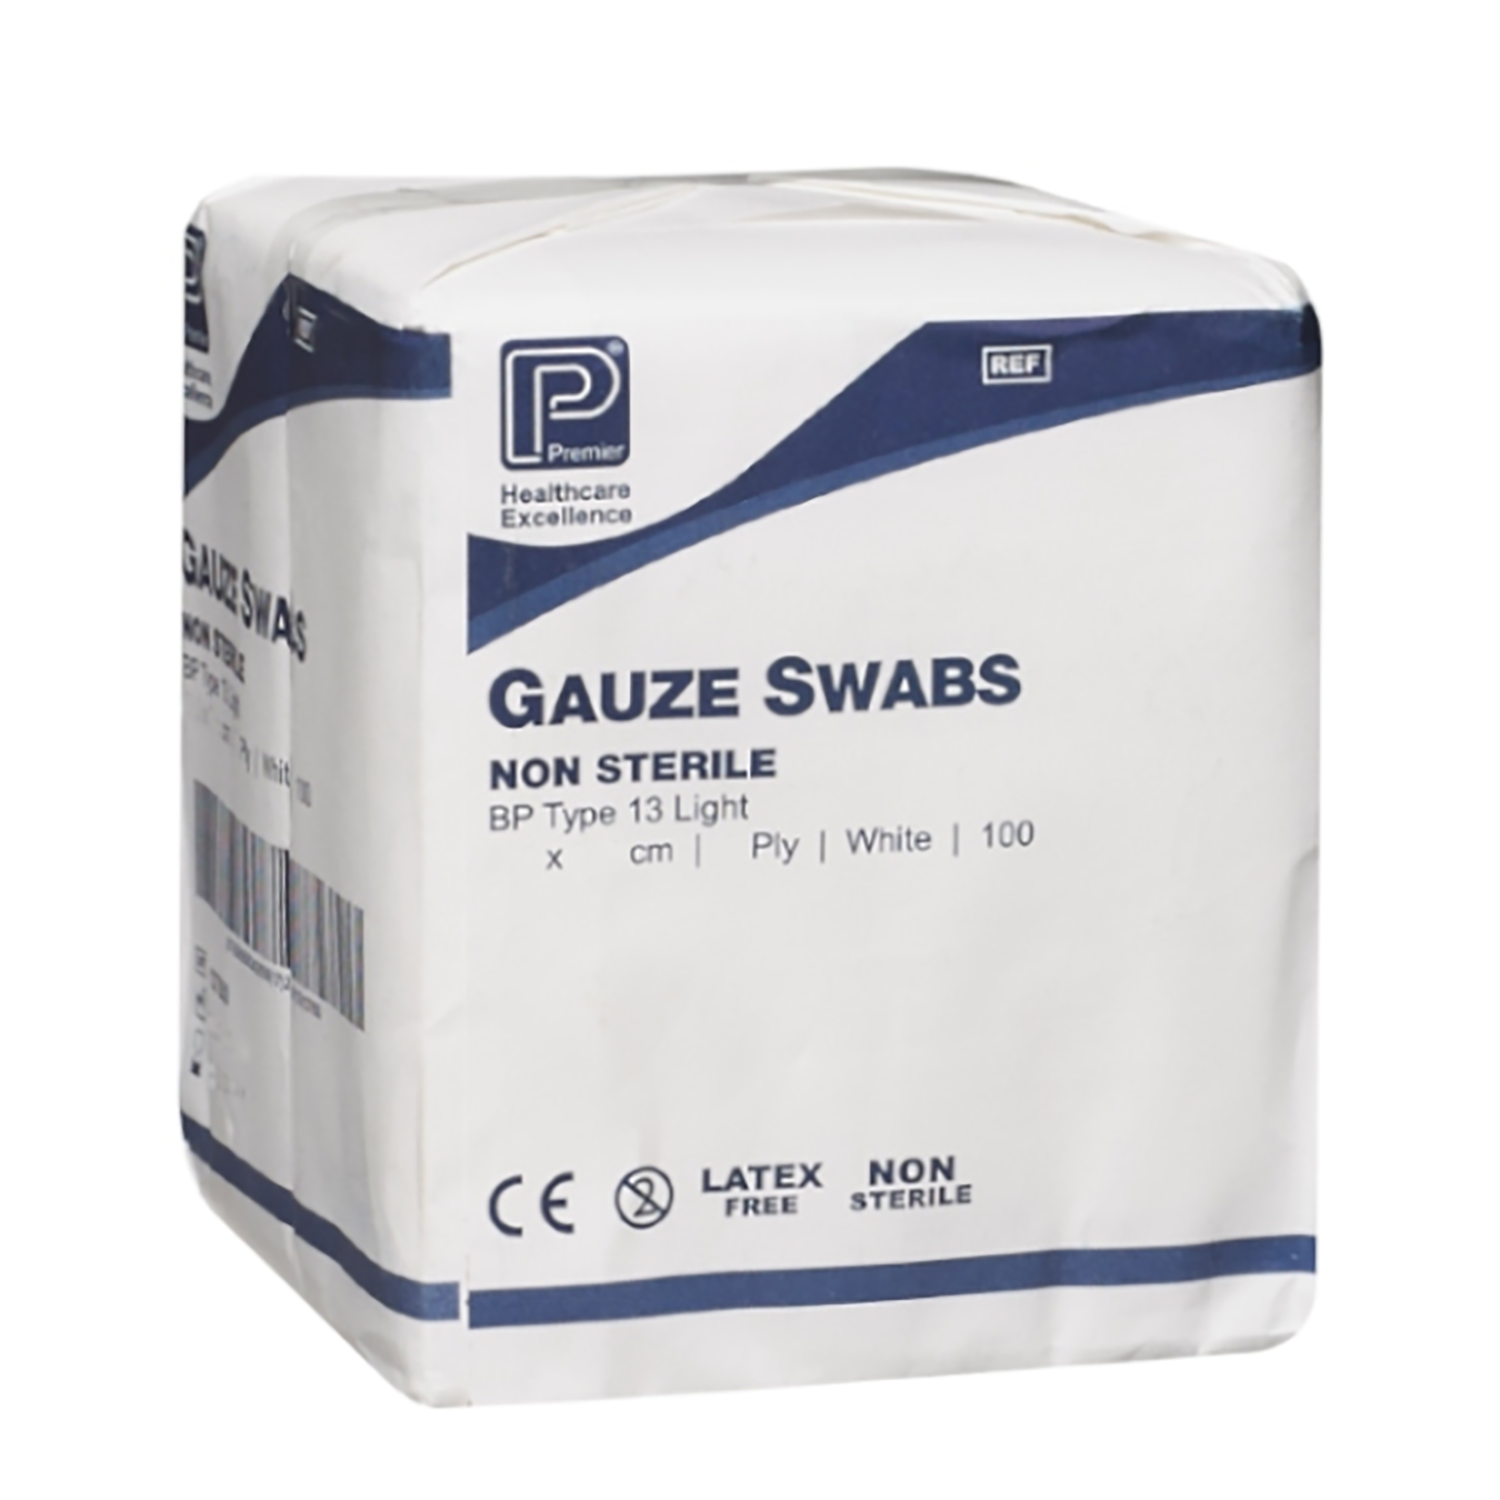 Premier Gauze Swabs | Non-Sterile | 8ply | 5 x 5cm | Pack of 100